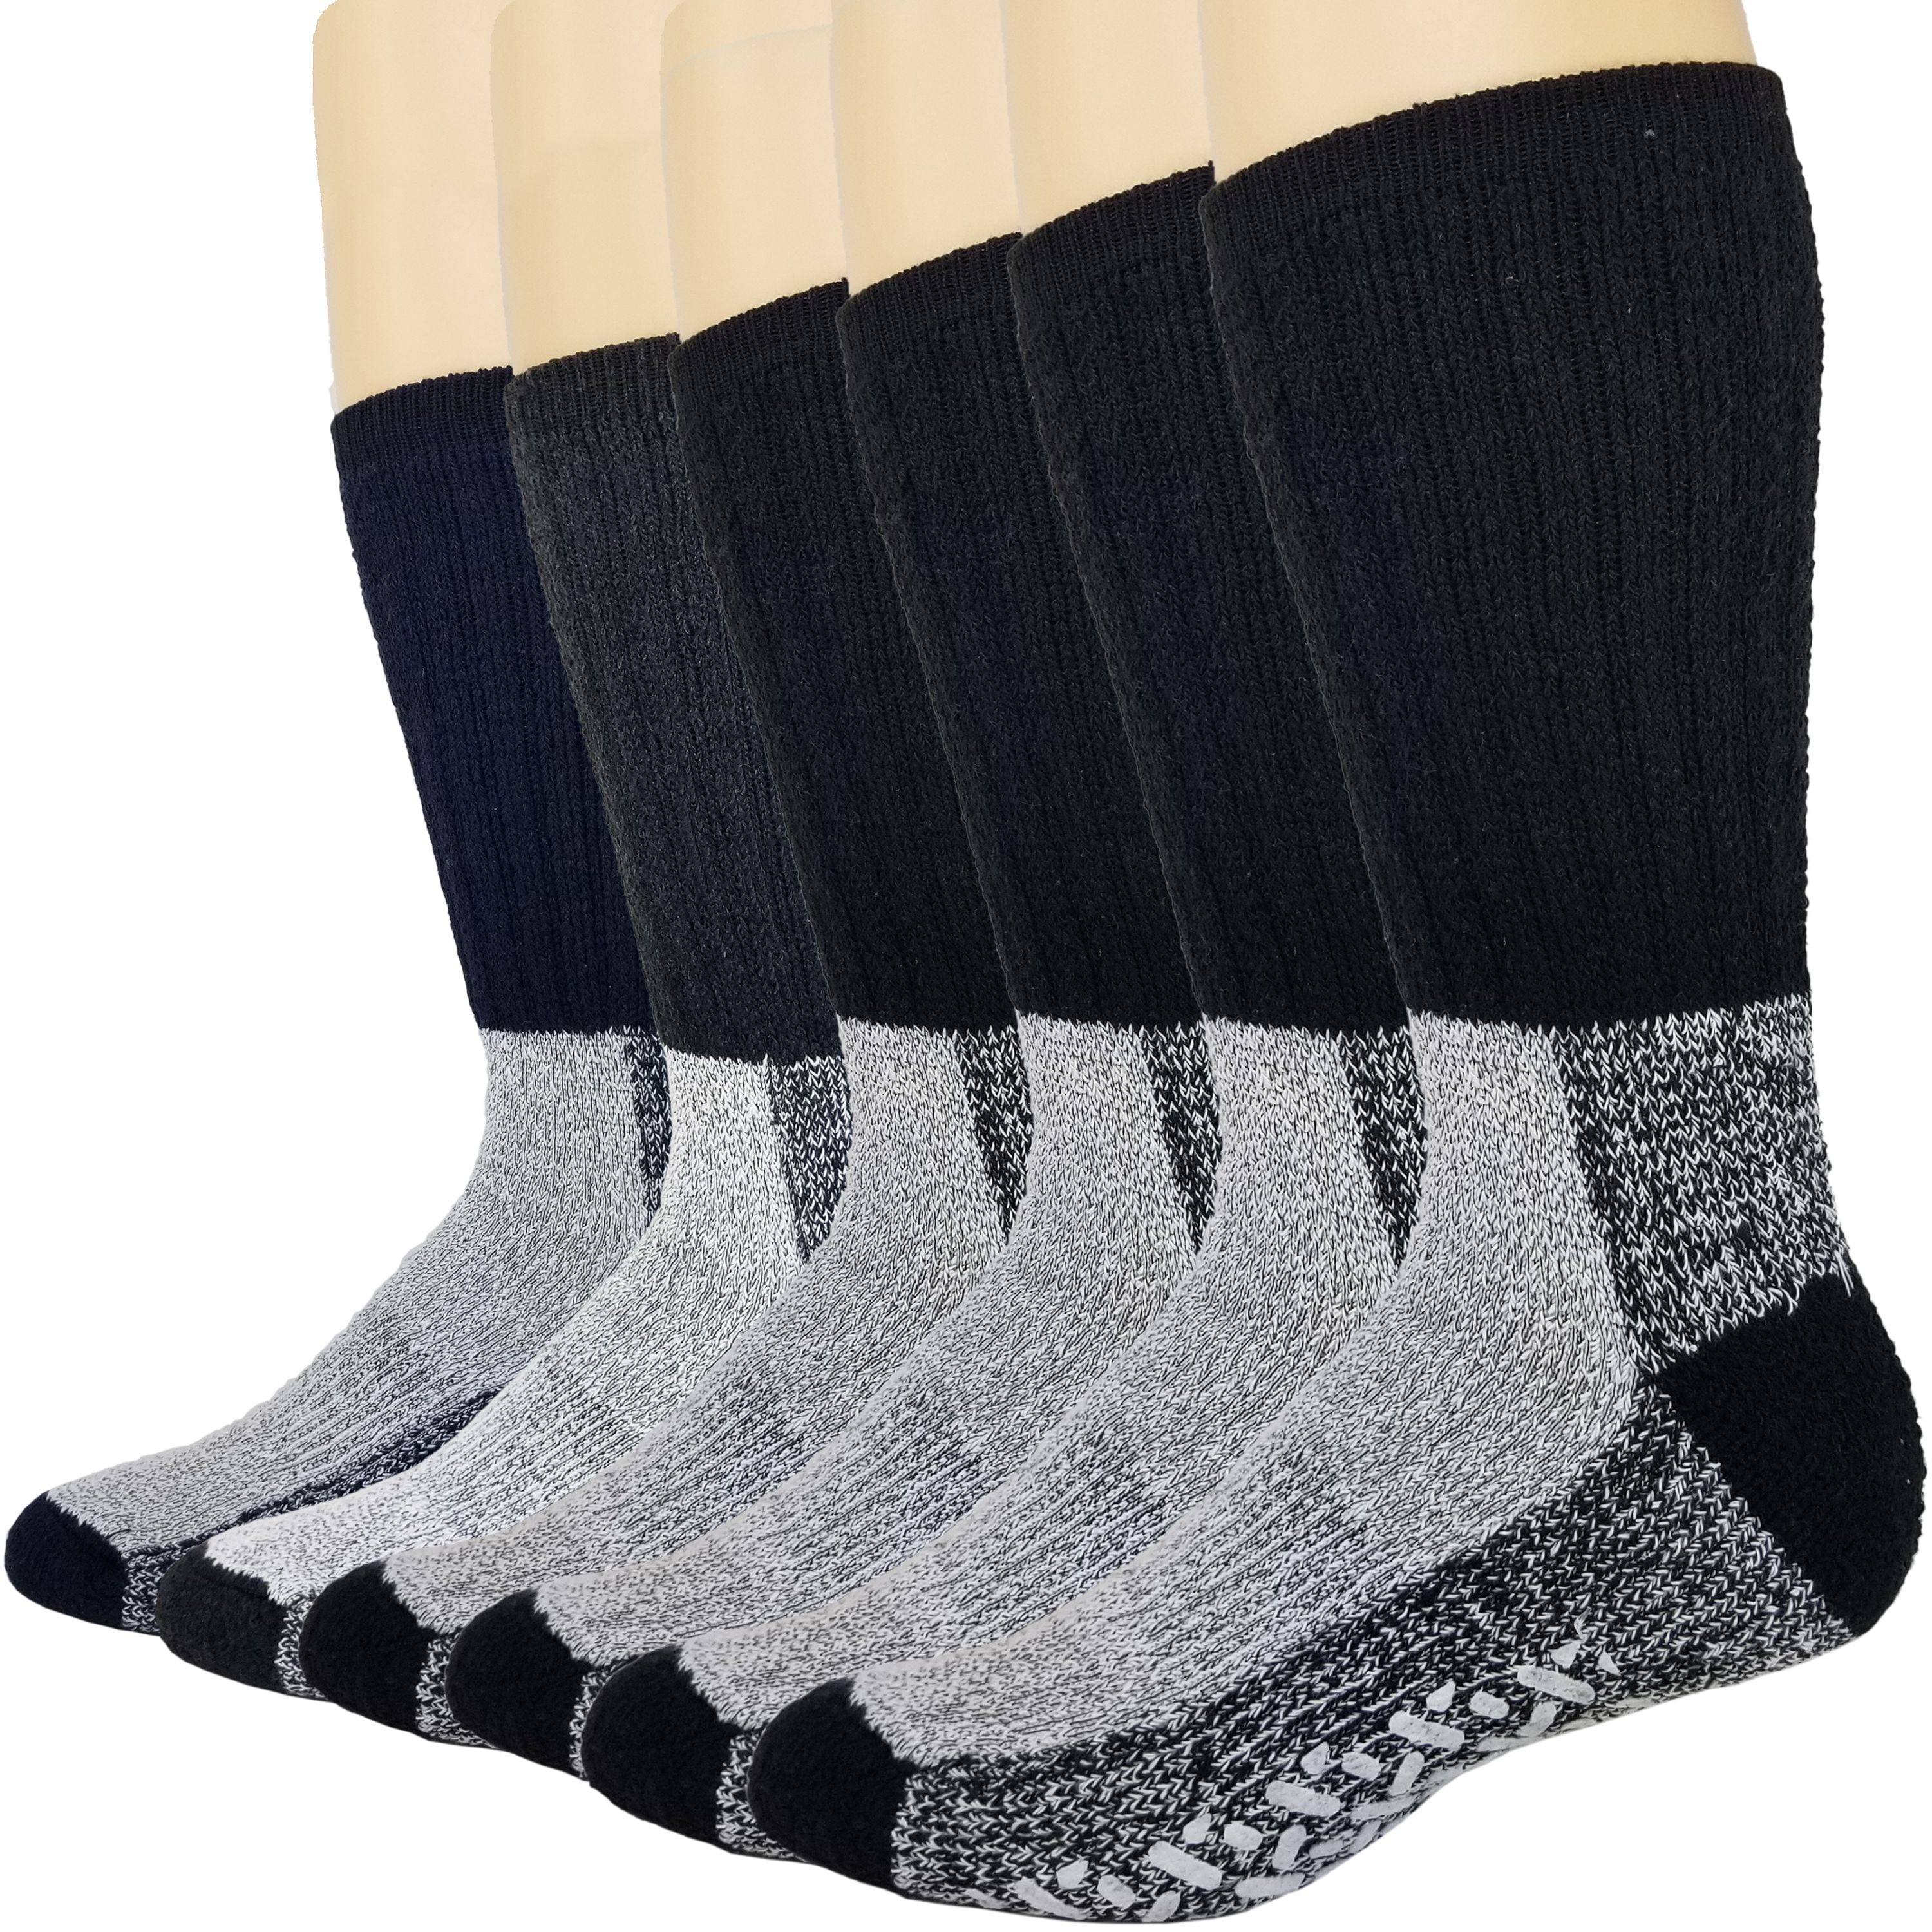 4 Pairs Organic Merino Wool Socks for Women Thermal Hiking Running Socks Crew Boot Socks for Outdoor Activities Black 